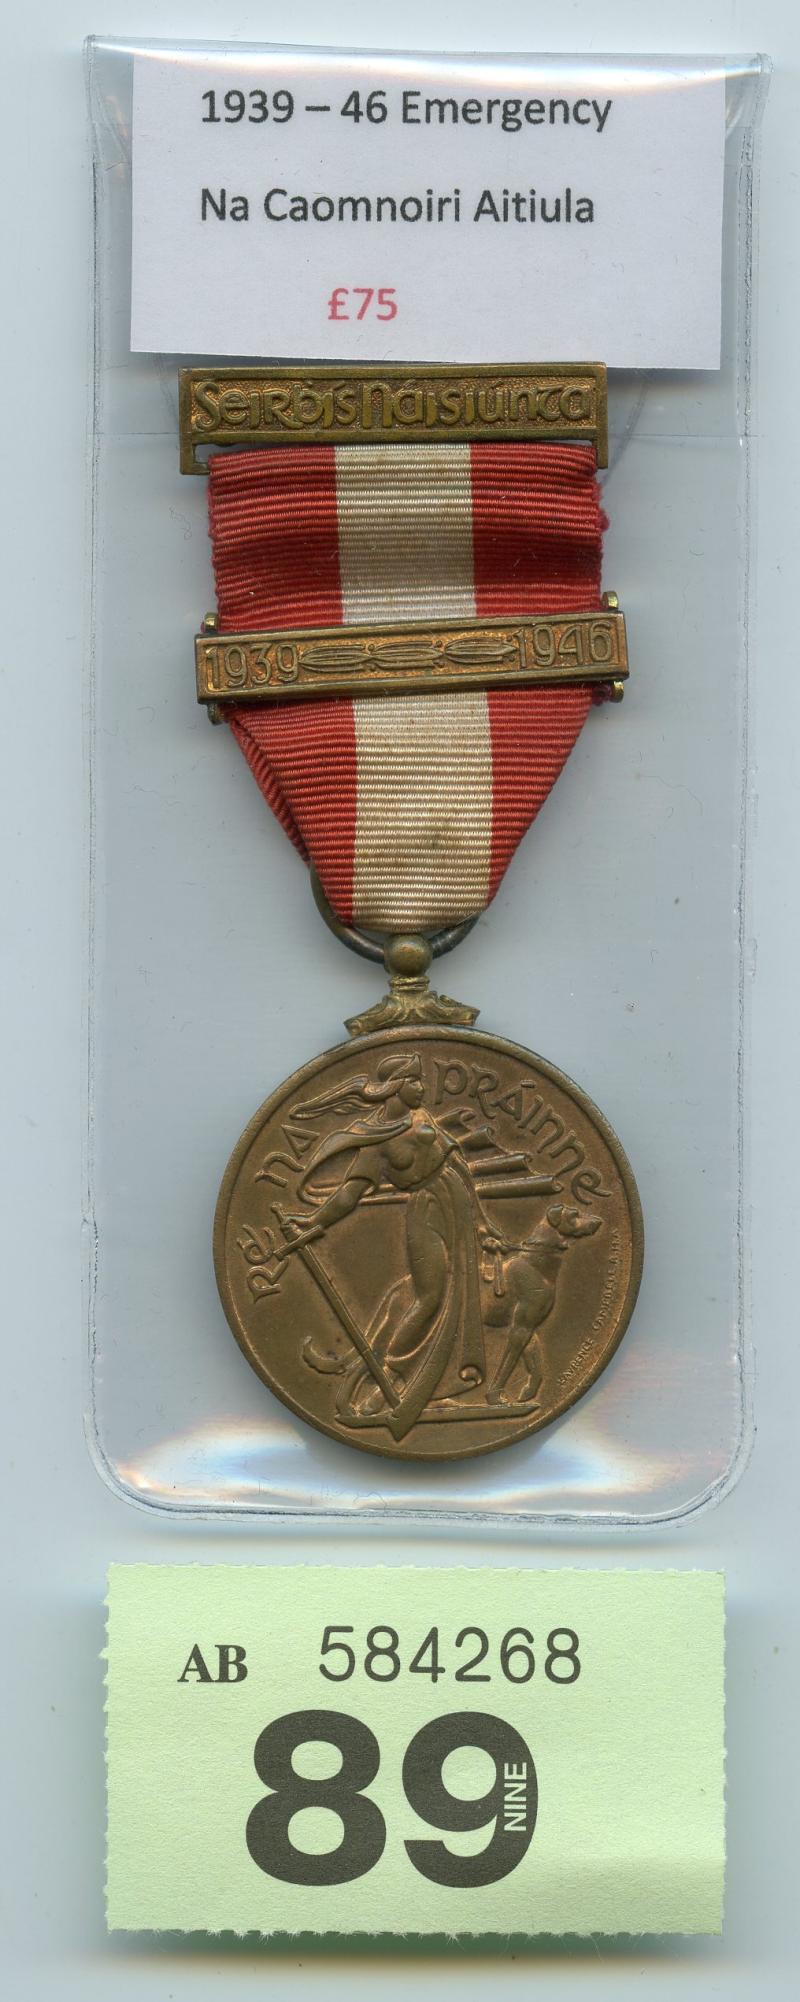 IDF Irish Emergency medal 1939 / 46 Na Caomnoiri Aitiula